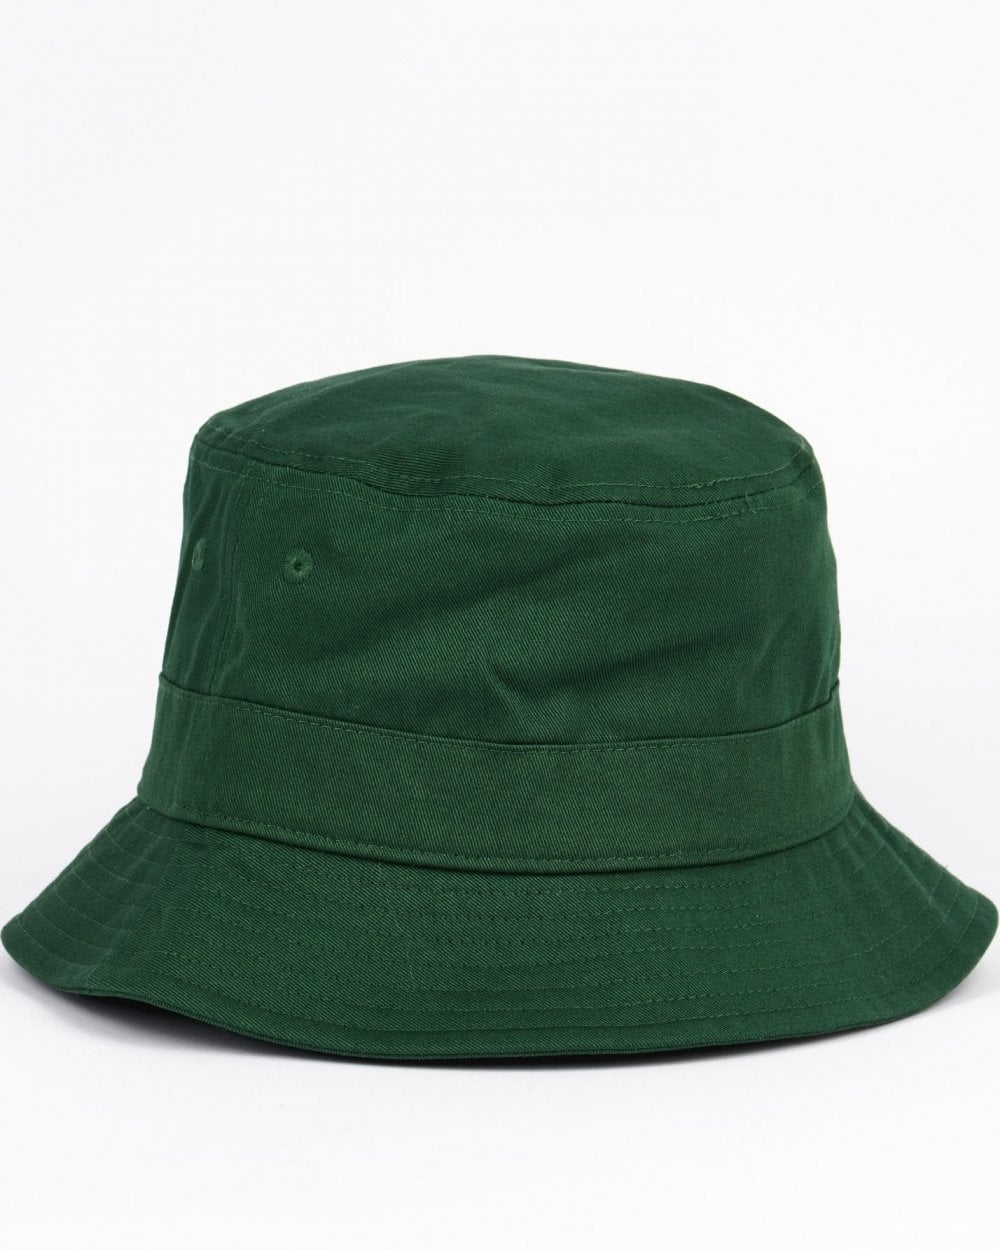 Cascade Bucket Hat